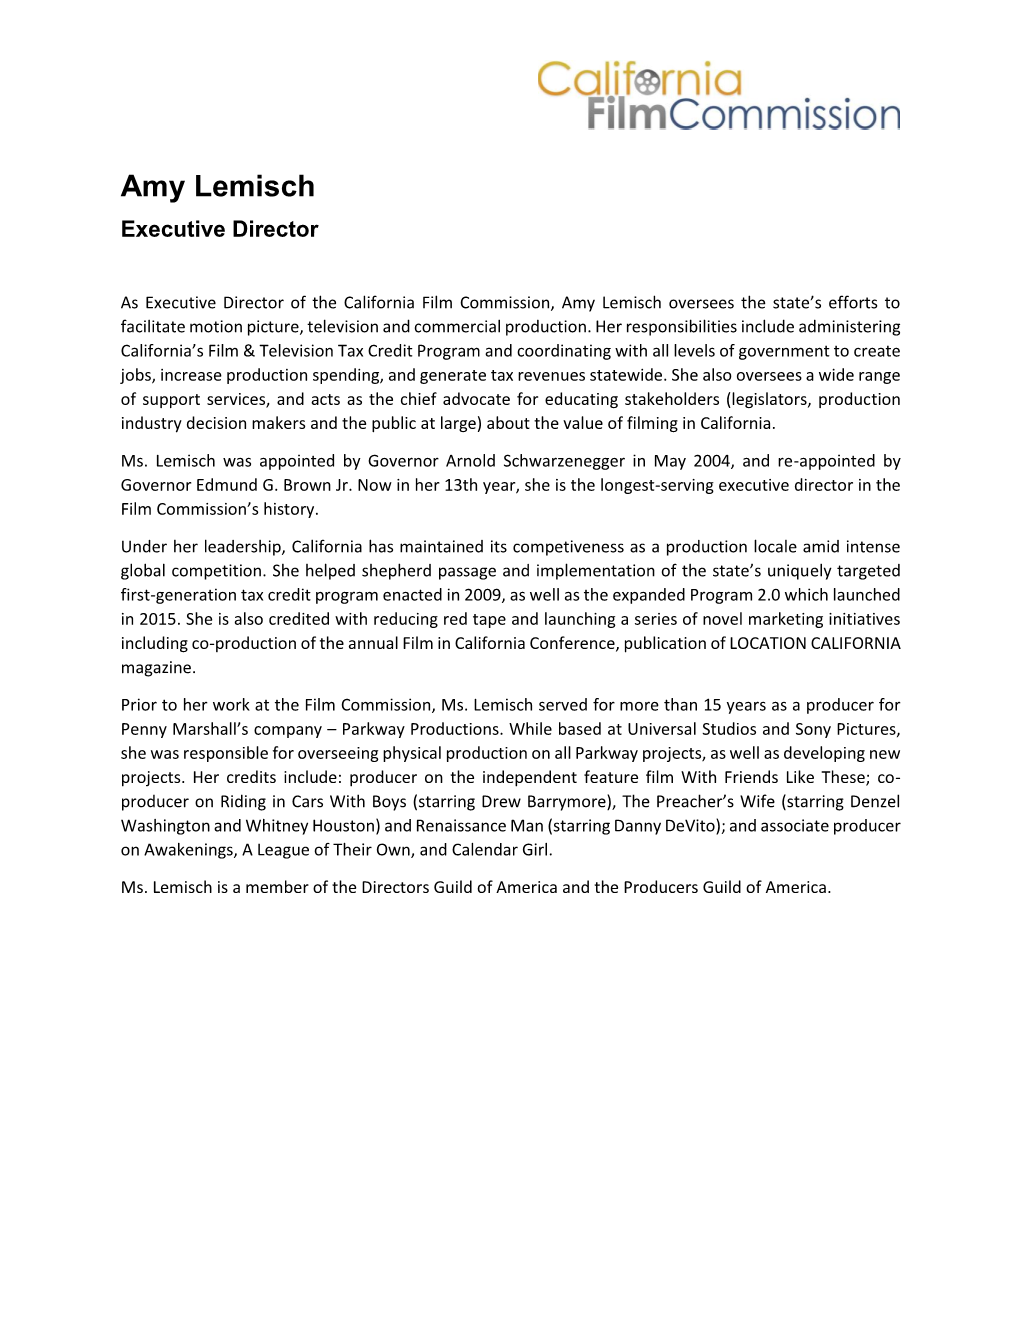 Amy Lemisch Executive Director